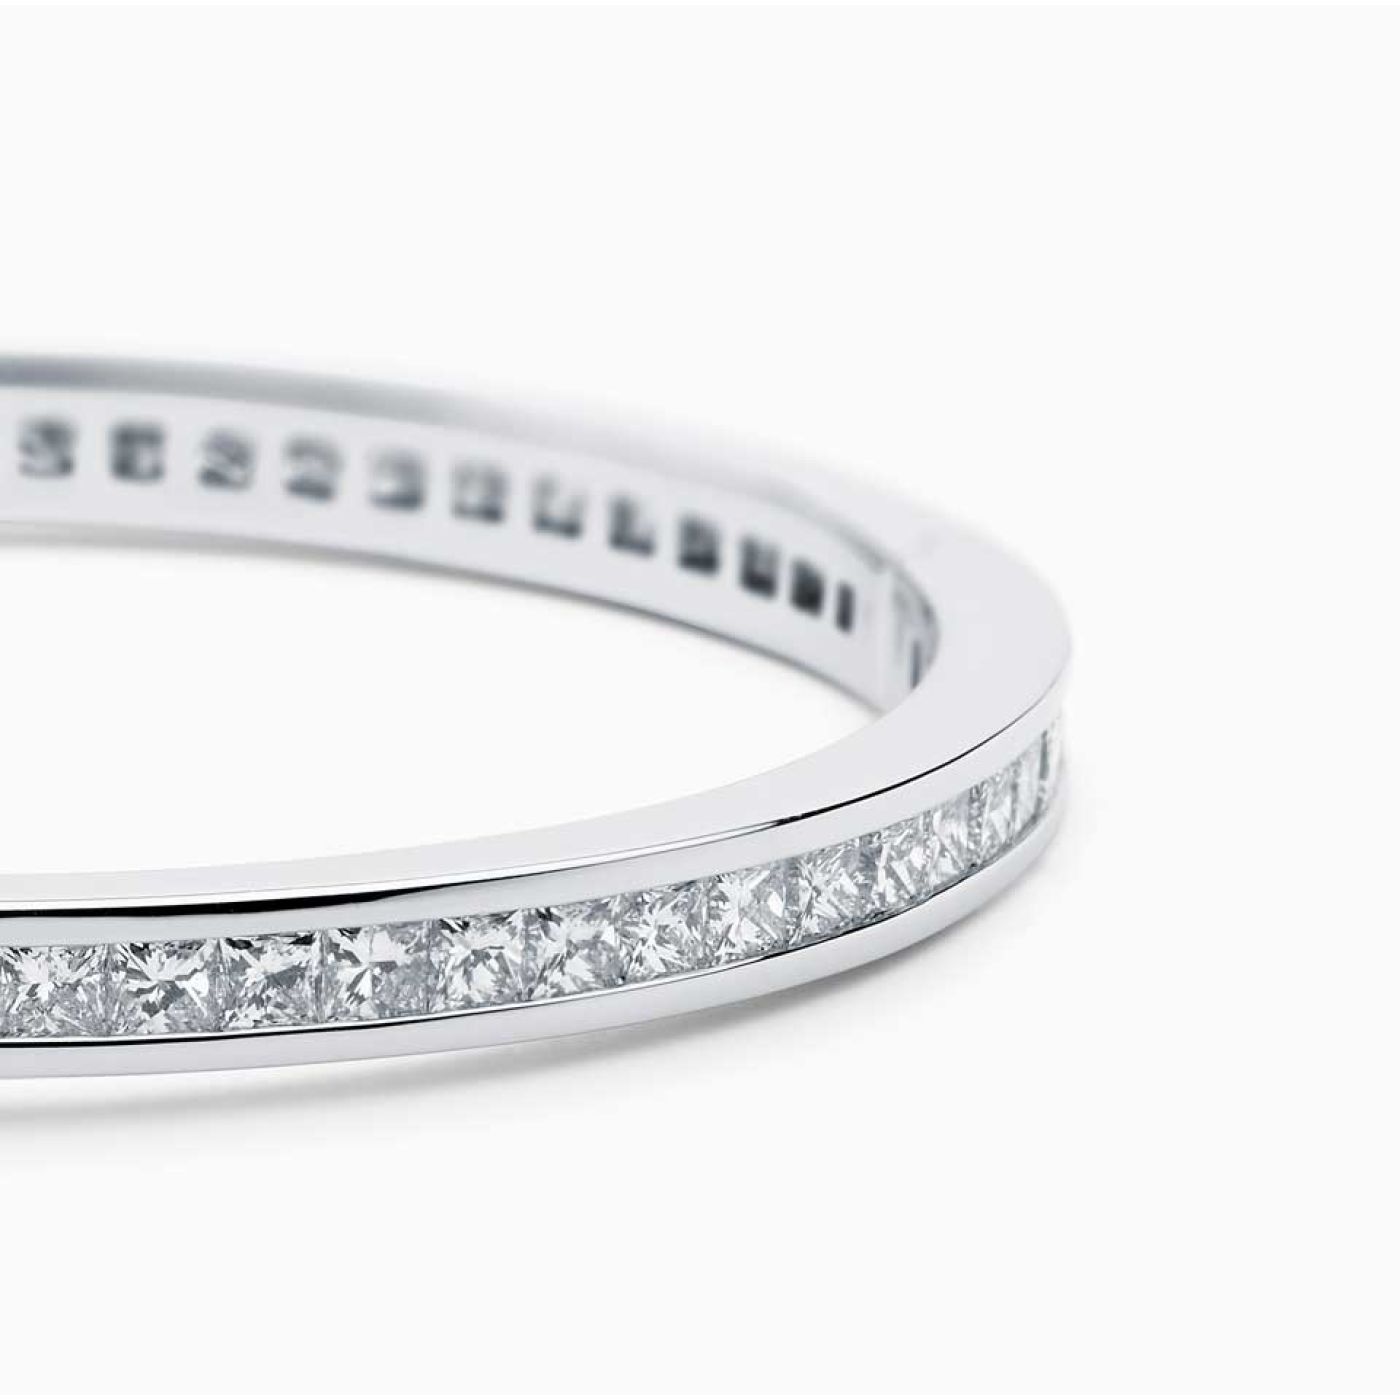 White gold bracelet with princess-cut diamonds